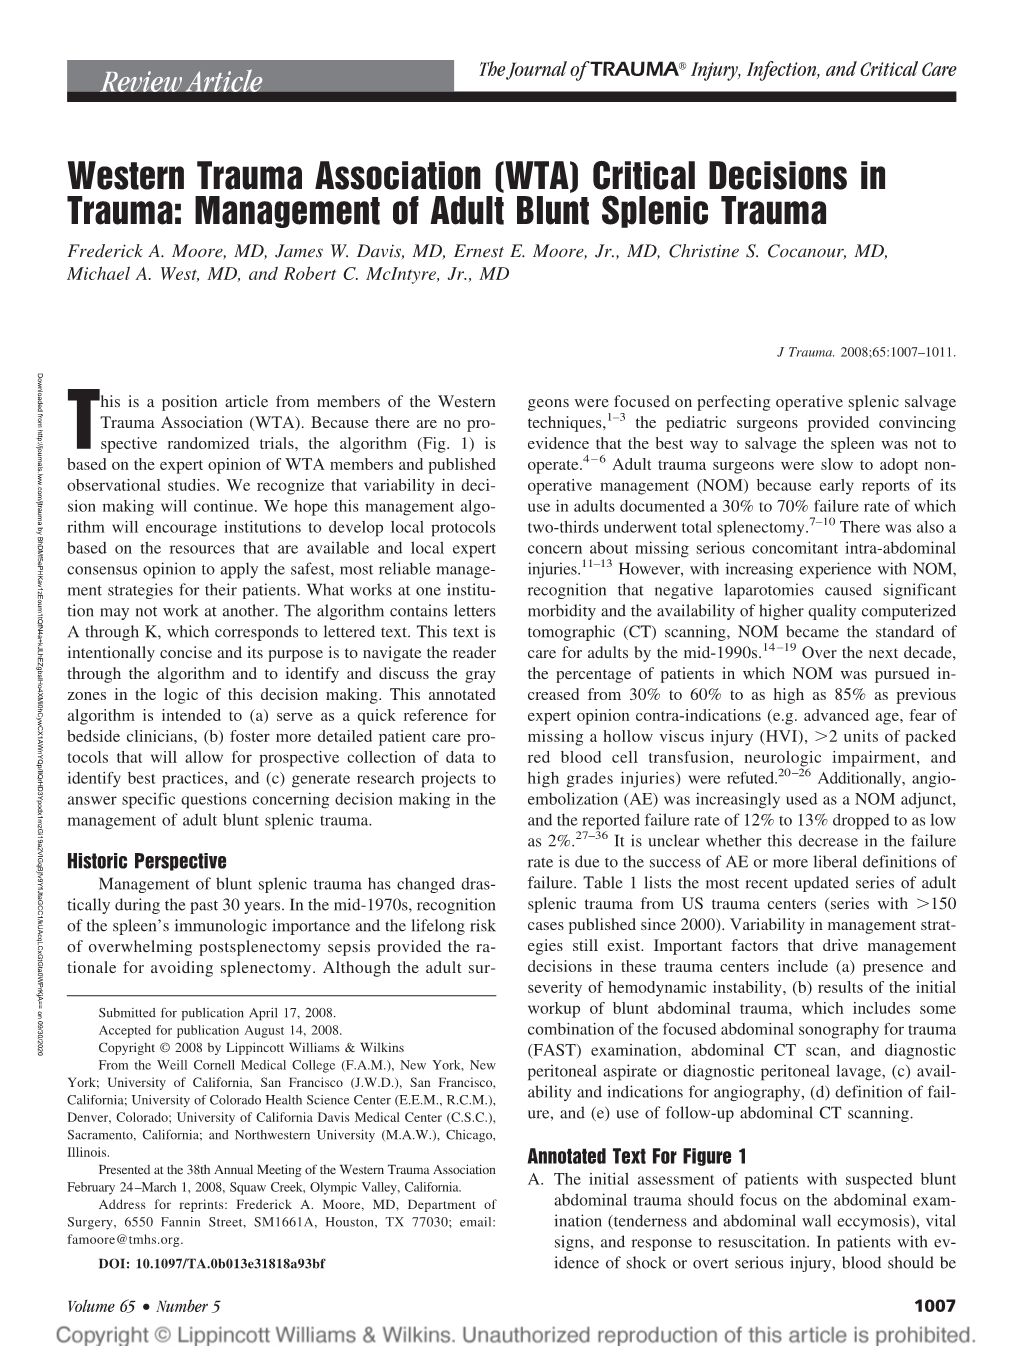 Management of Adult Blunt Splenic Trauma